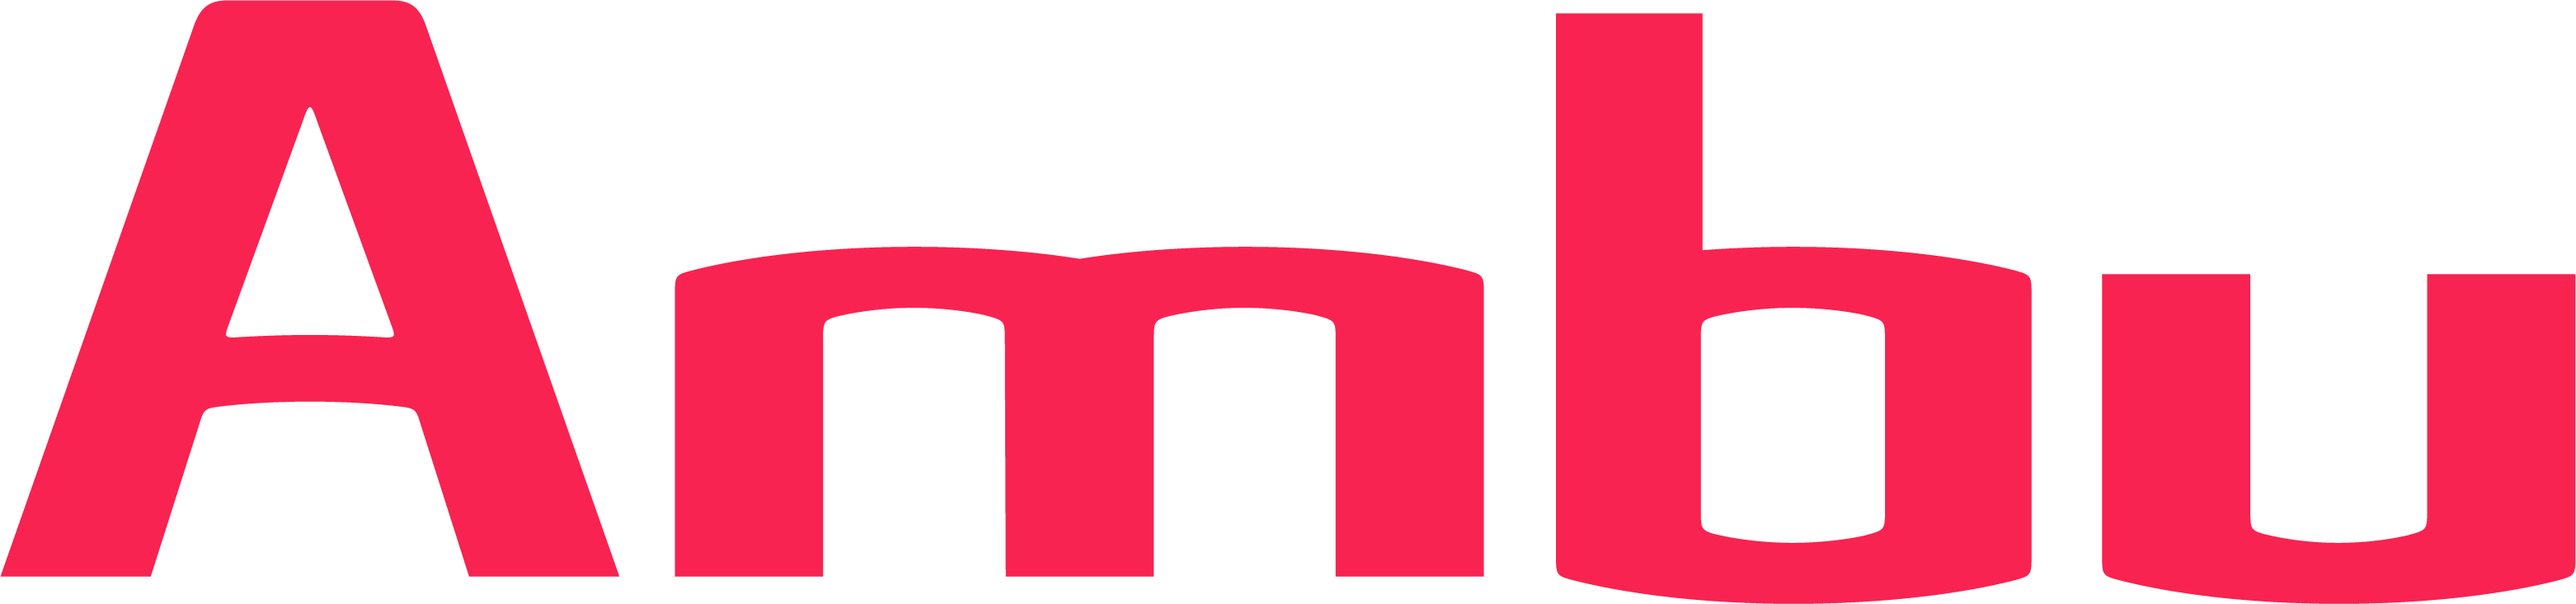 Ambu logo Red RGB logo